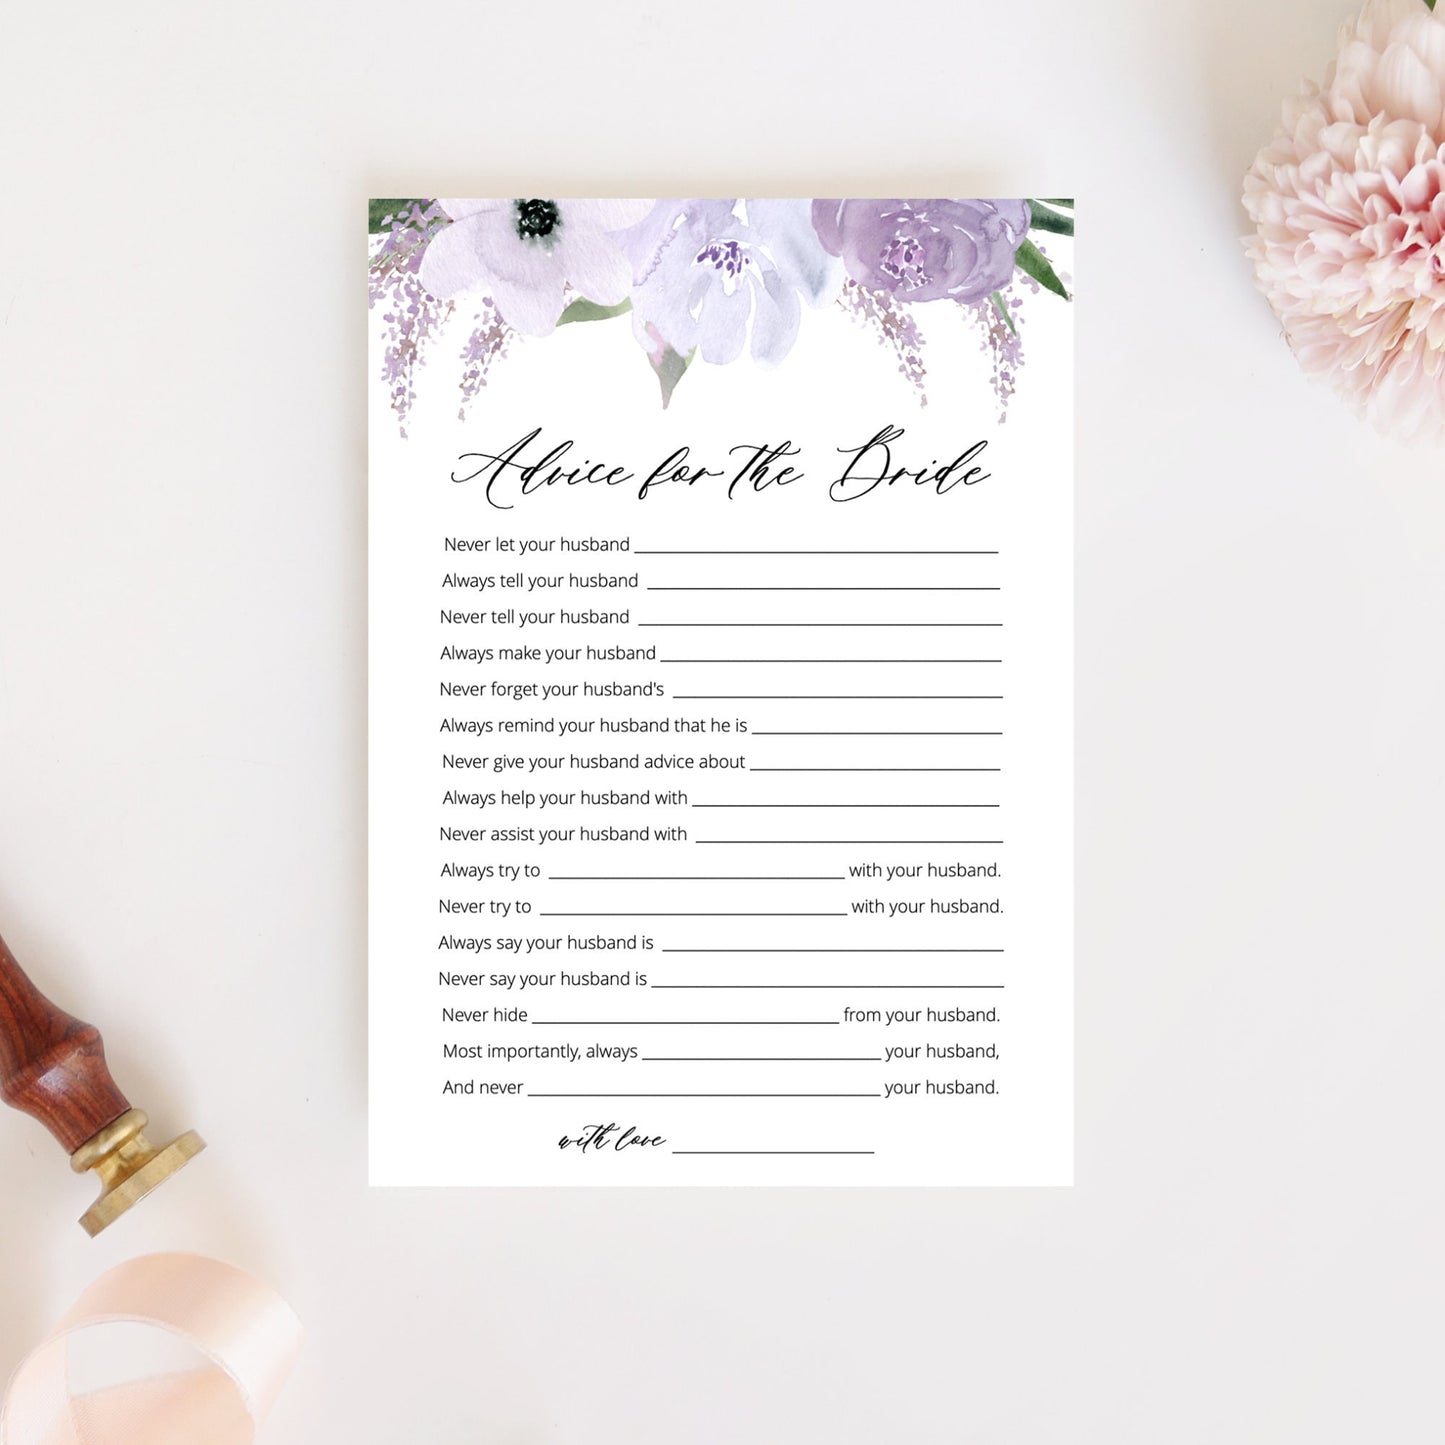 Editable Advice for the Bride Bridal Shower Games Purple Floral Lavender Template